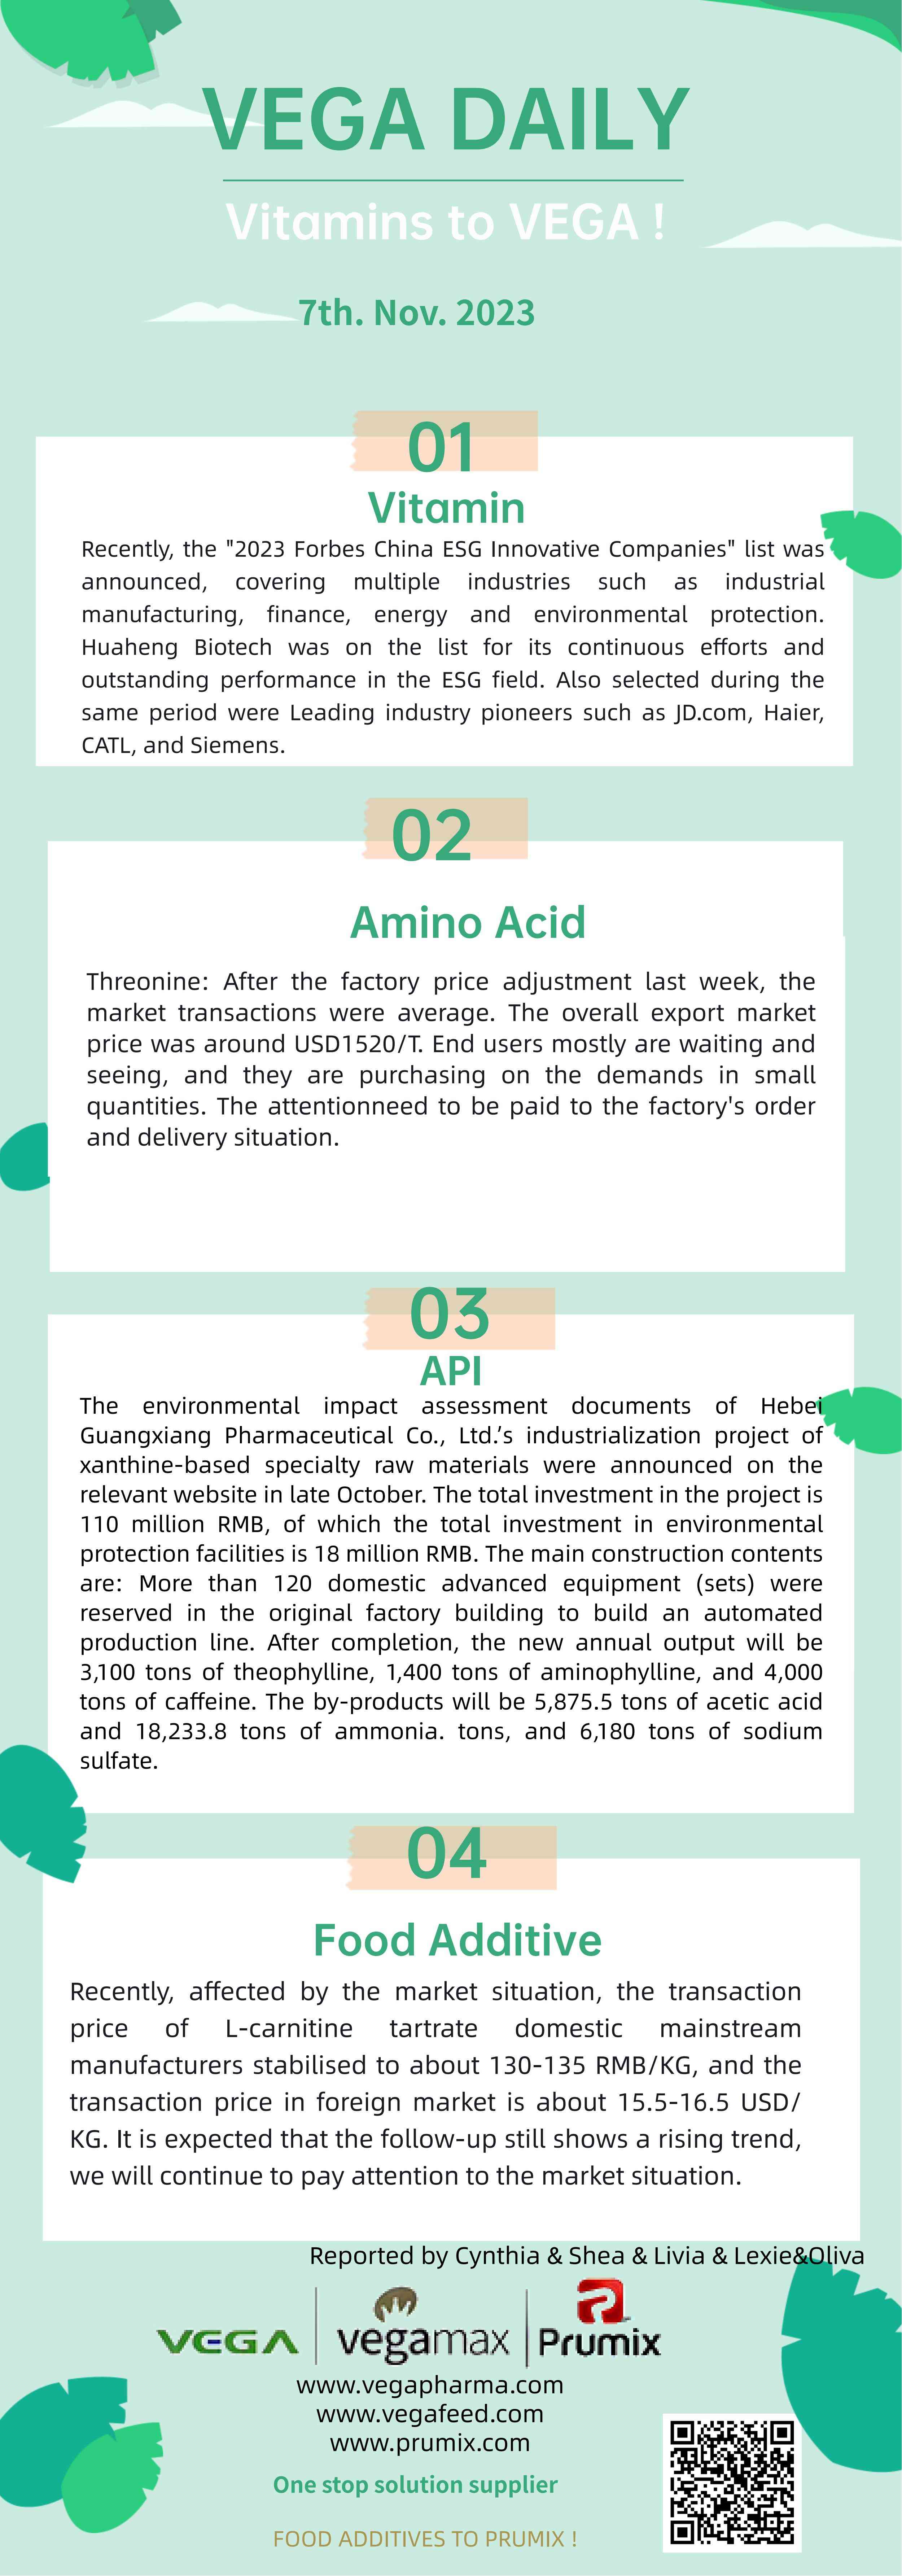 Vega Daily Dated on Nov 7th 2023 Vitamin  Amino Acid API Food Additives.jpg